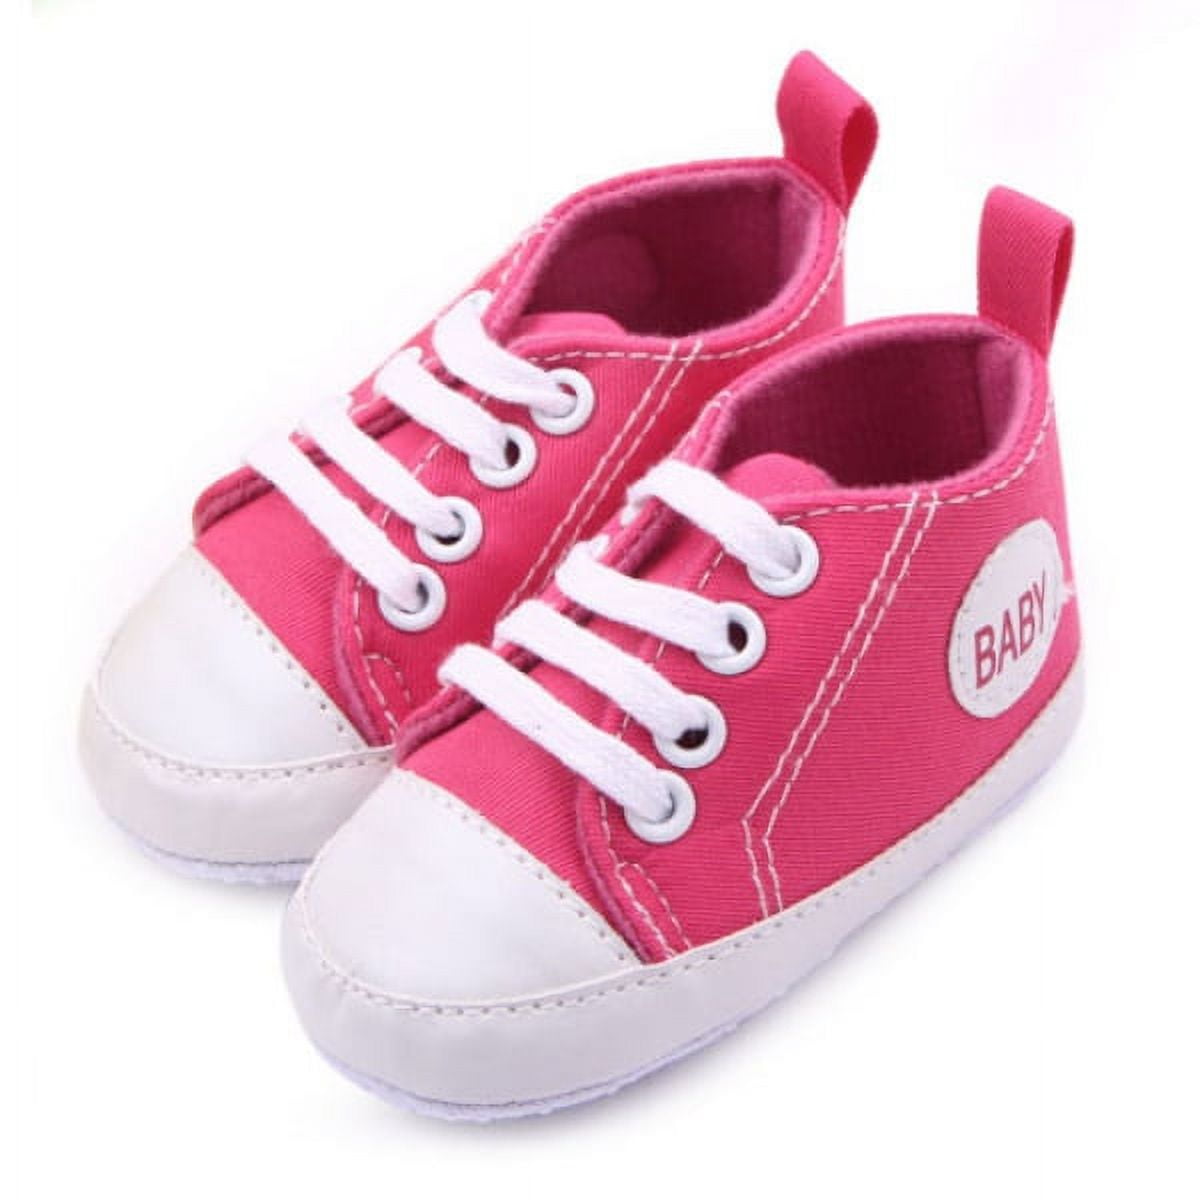 Infant Toddler Newborn Soft Sole Crib Shoes Sneaker Anti-Slip Baby Boy ...